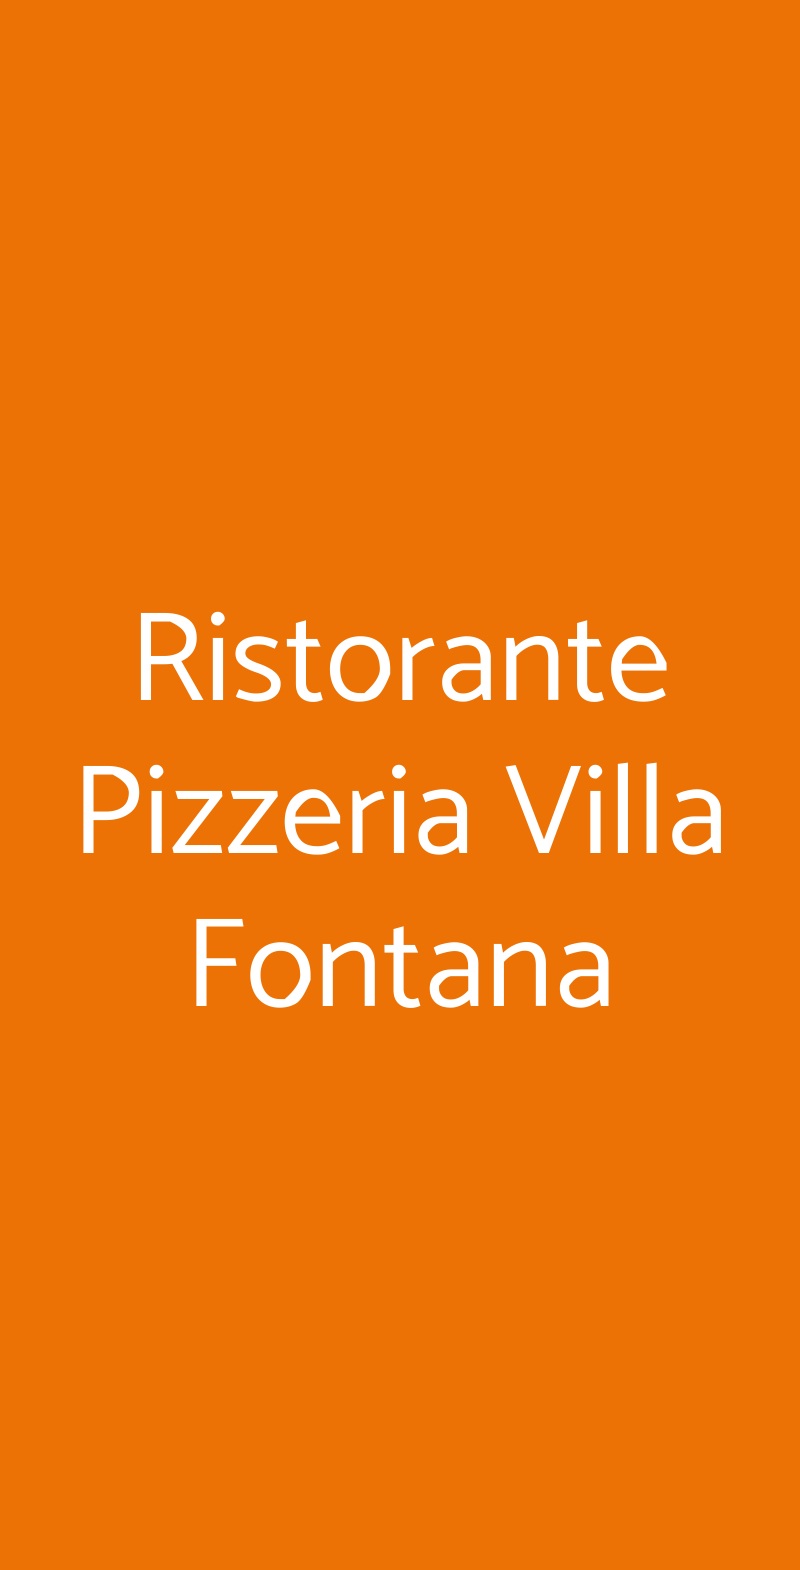 Ristorante Pizzeria Villa Fontana Roma menù 1 pagina